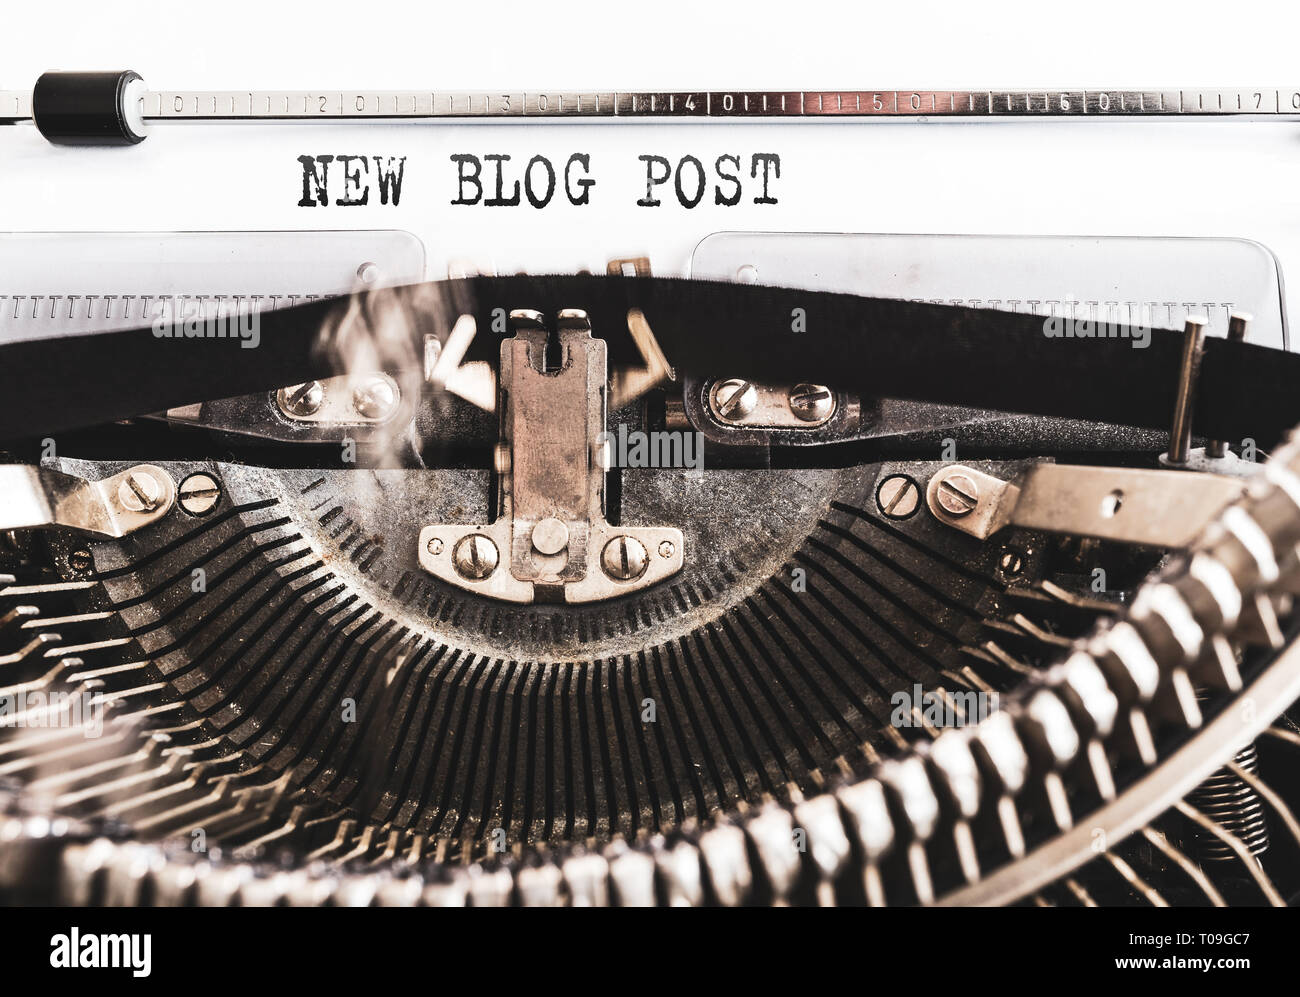 Mots New blog post écrit sur old manual typewriter Banque D'Images